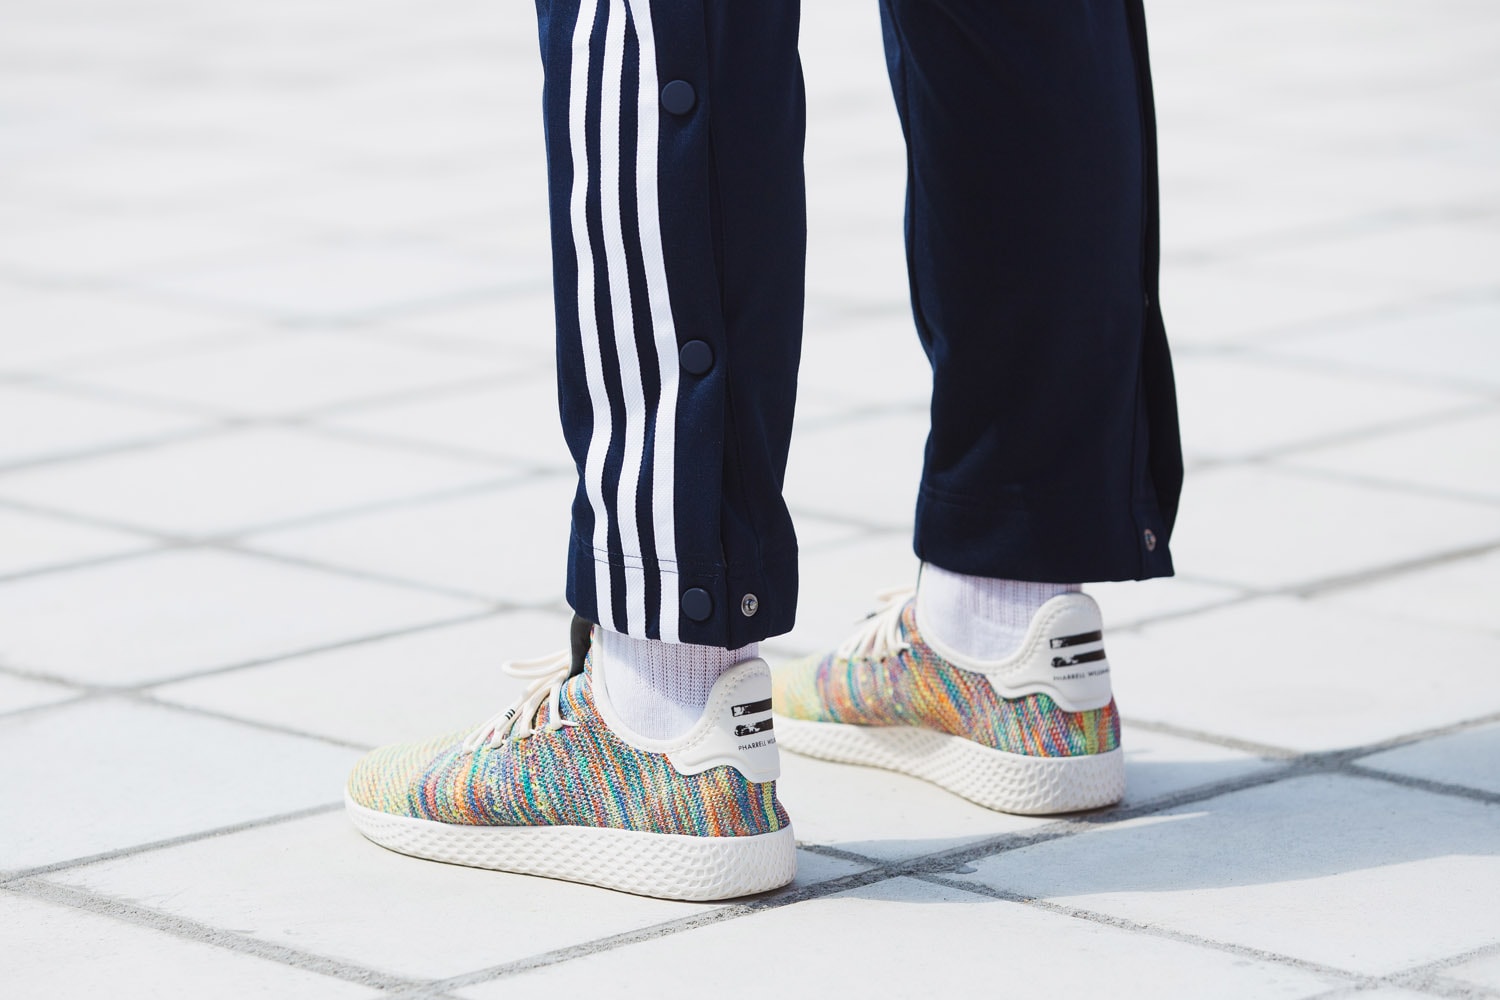 Pharrell Williams adidas Tennis Hu Multicolor On Feet march 3 2018 release date info drop sneakers shoes footwear